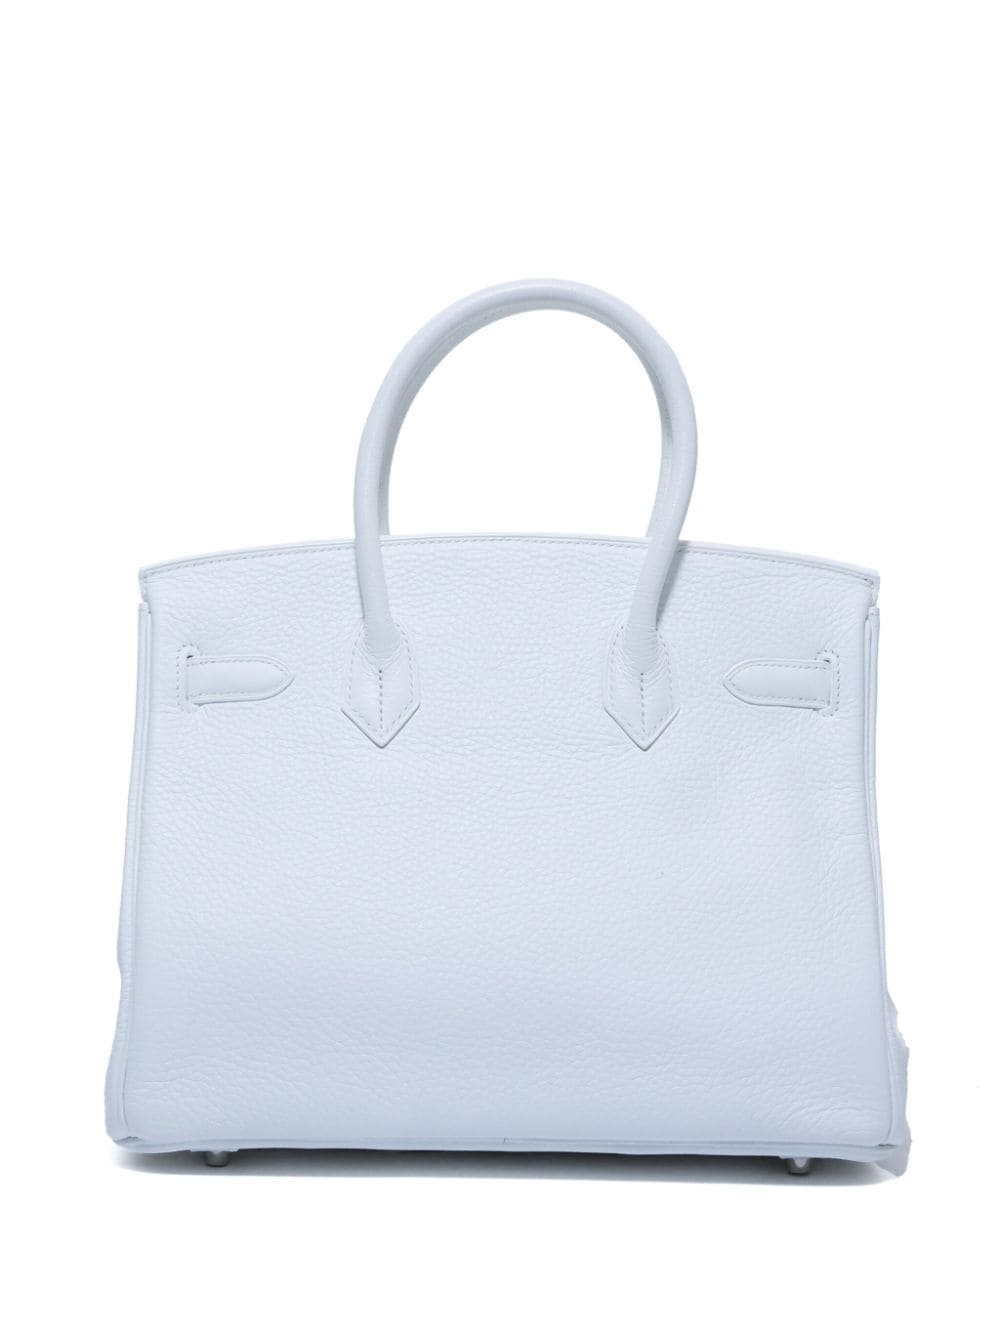 Hermès 2005 Birkin 30 Handbag